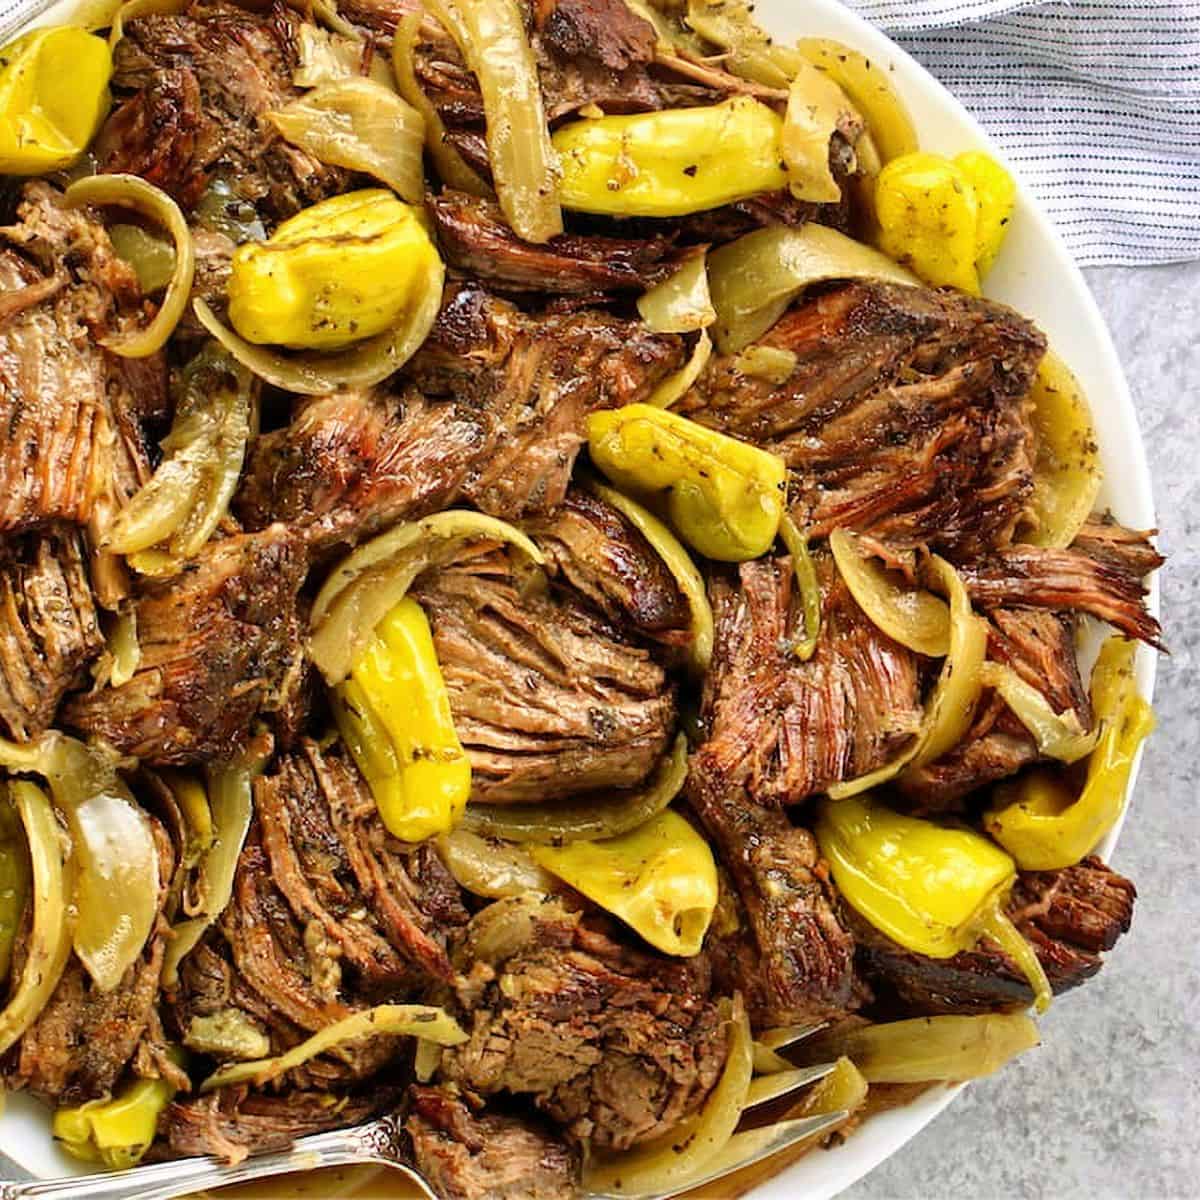 7. Low Carb Slow Cooker Italian Beef - Italian Beef Recipes In Crock Pot